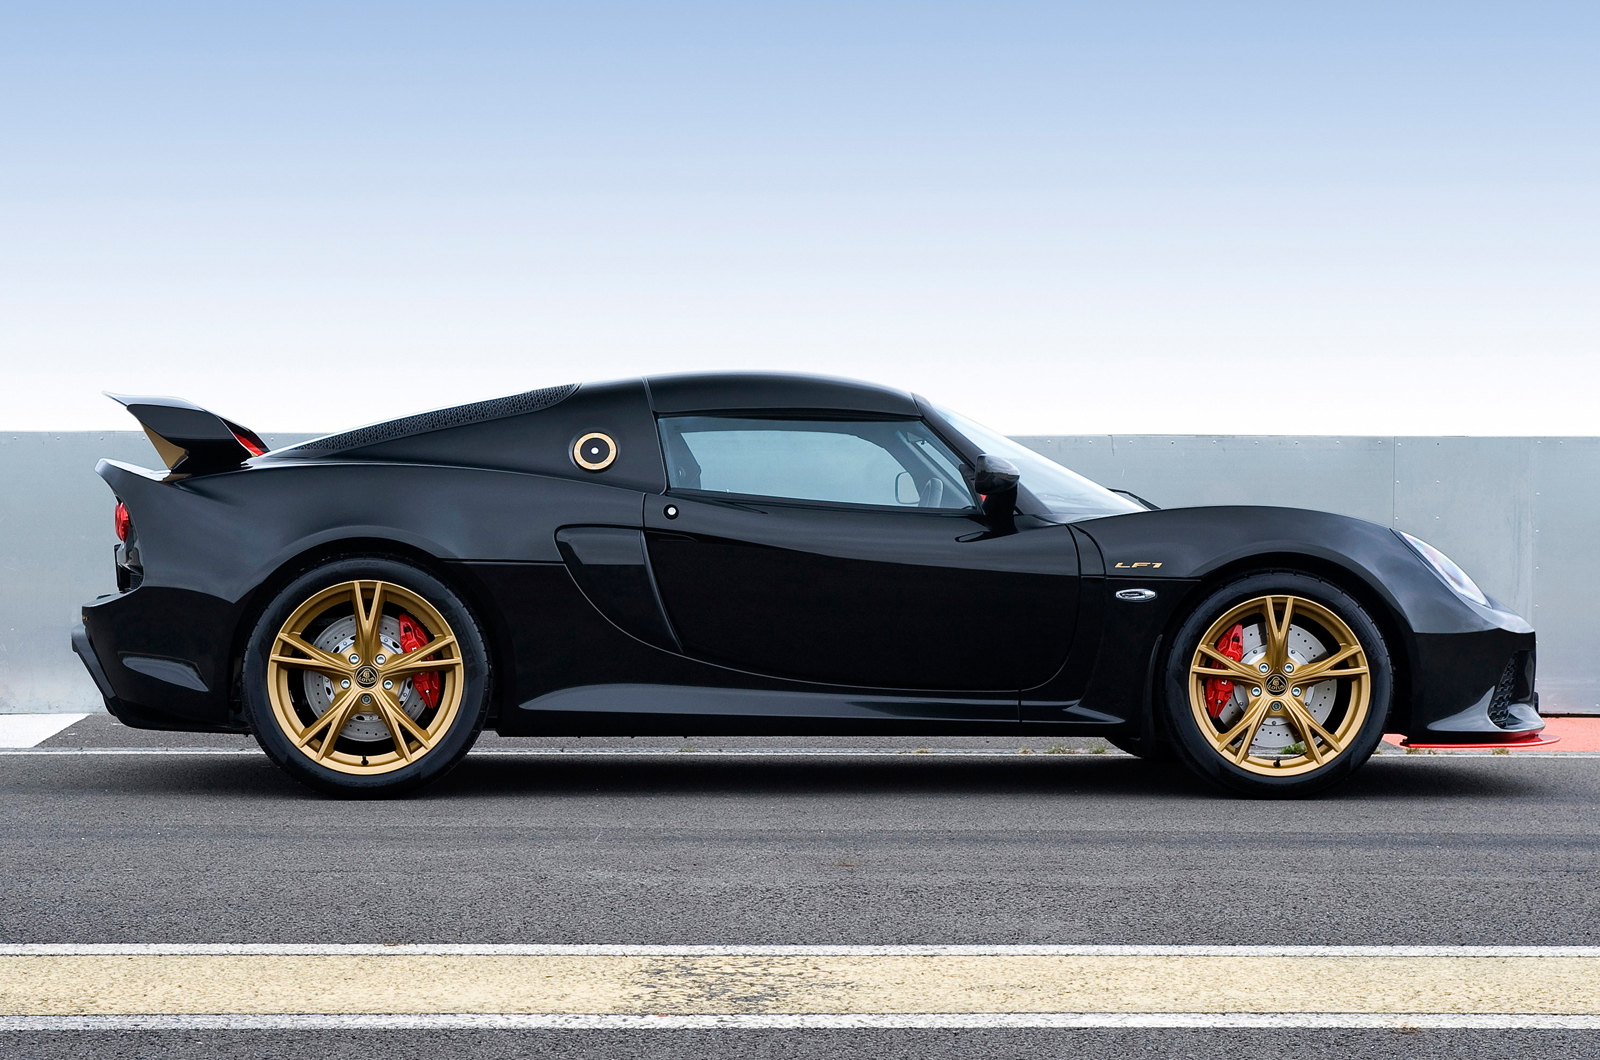 Limited-edition Lotus Exige LF1 revealed | Autocar